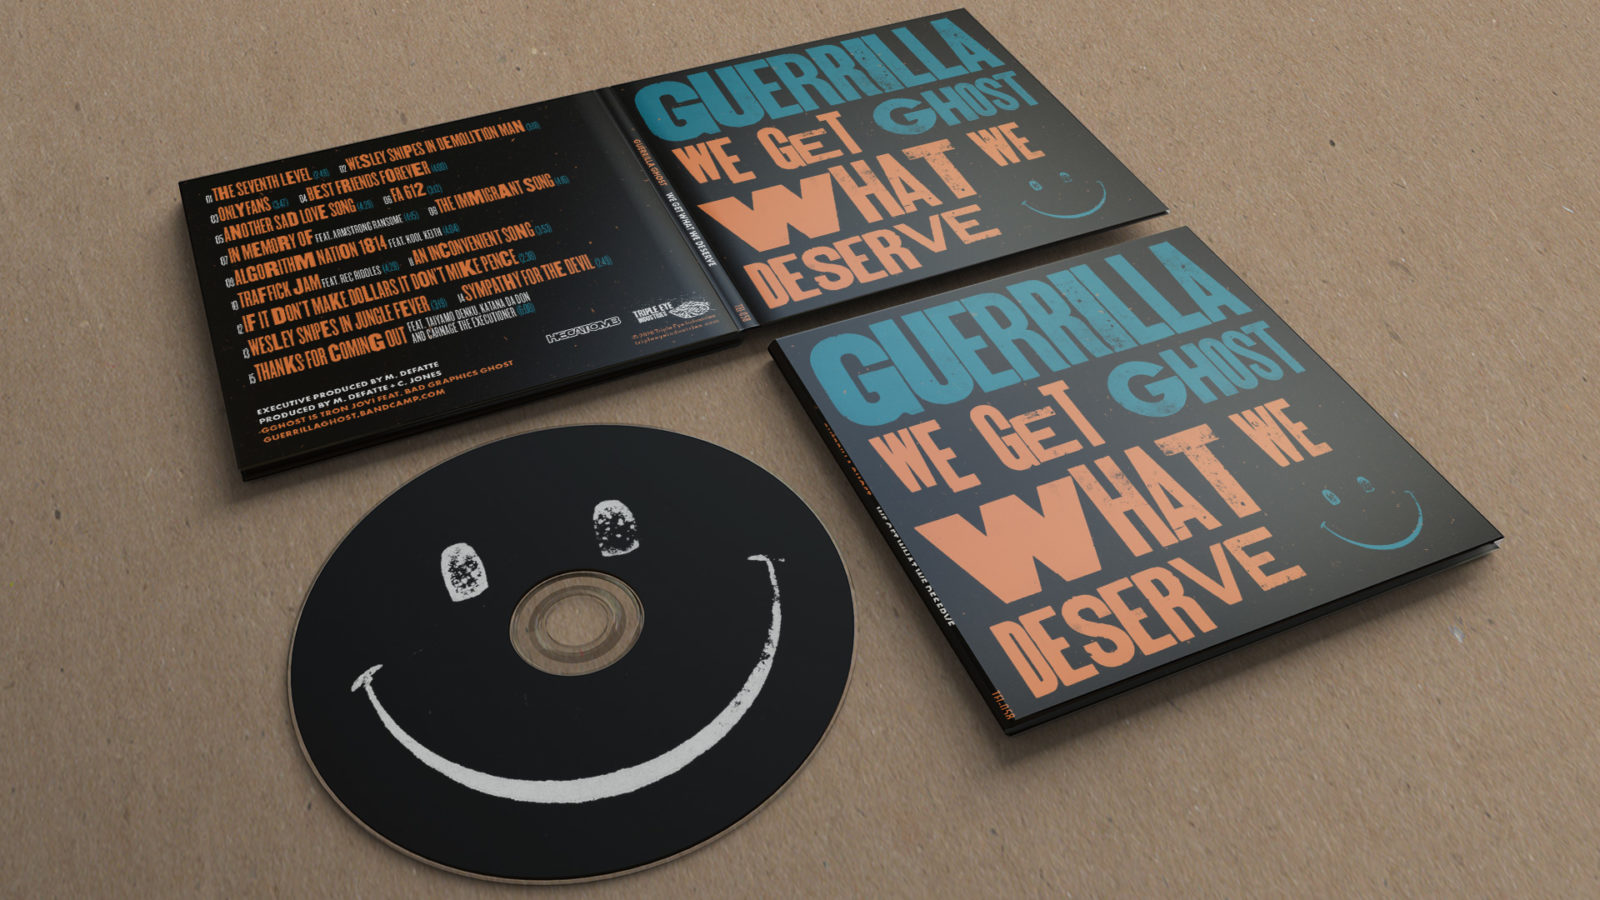 Guerrilla Ghost – “We Get What We Deserve” Album Production